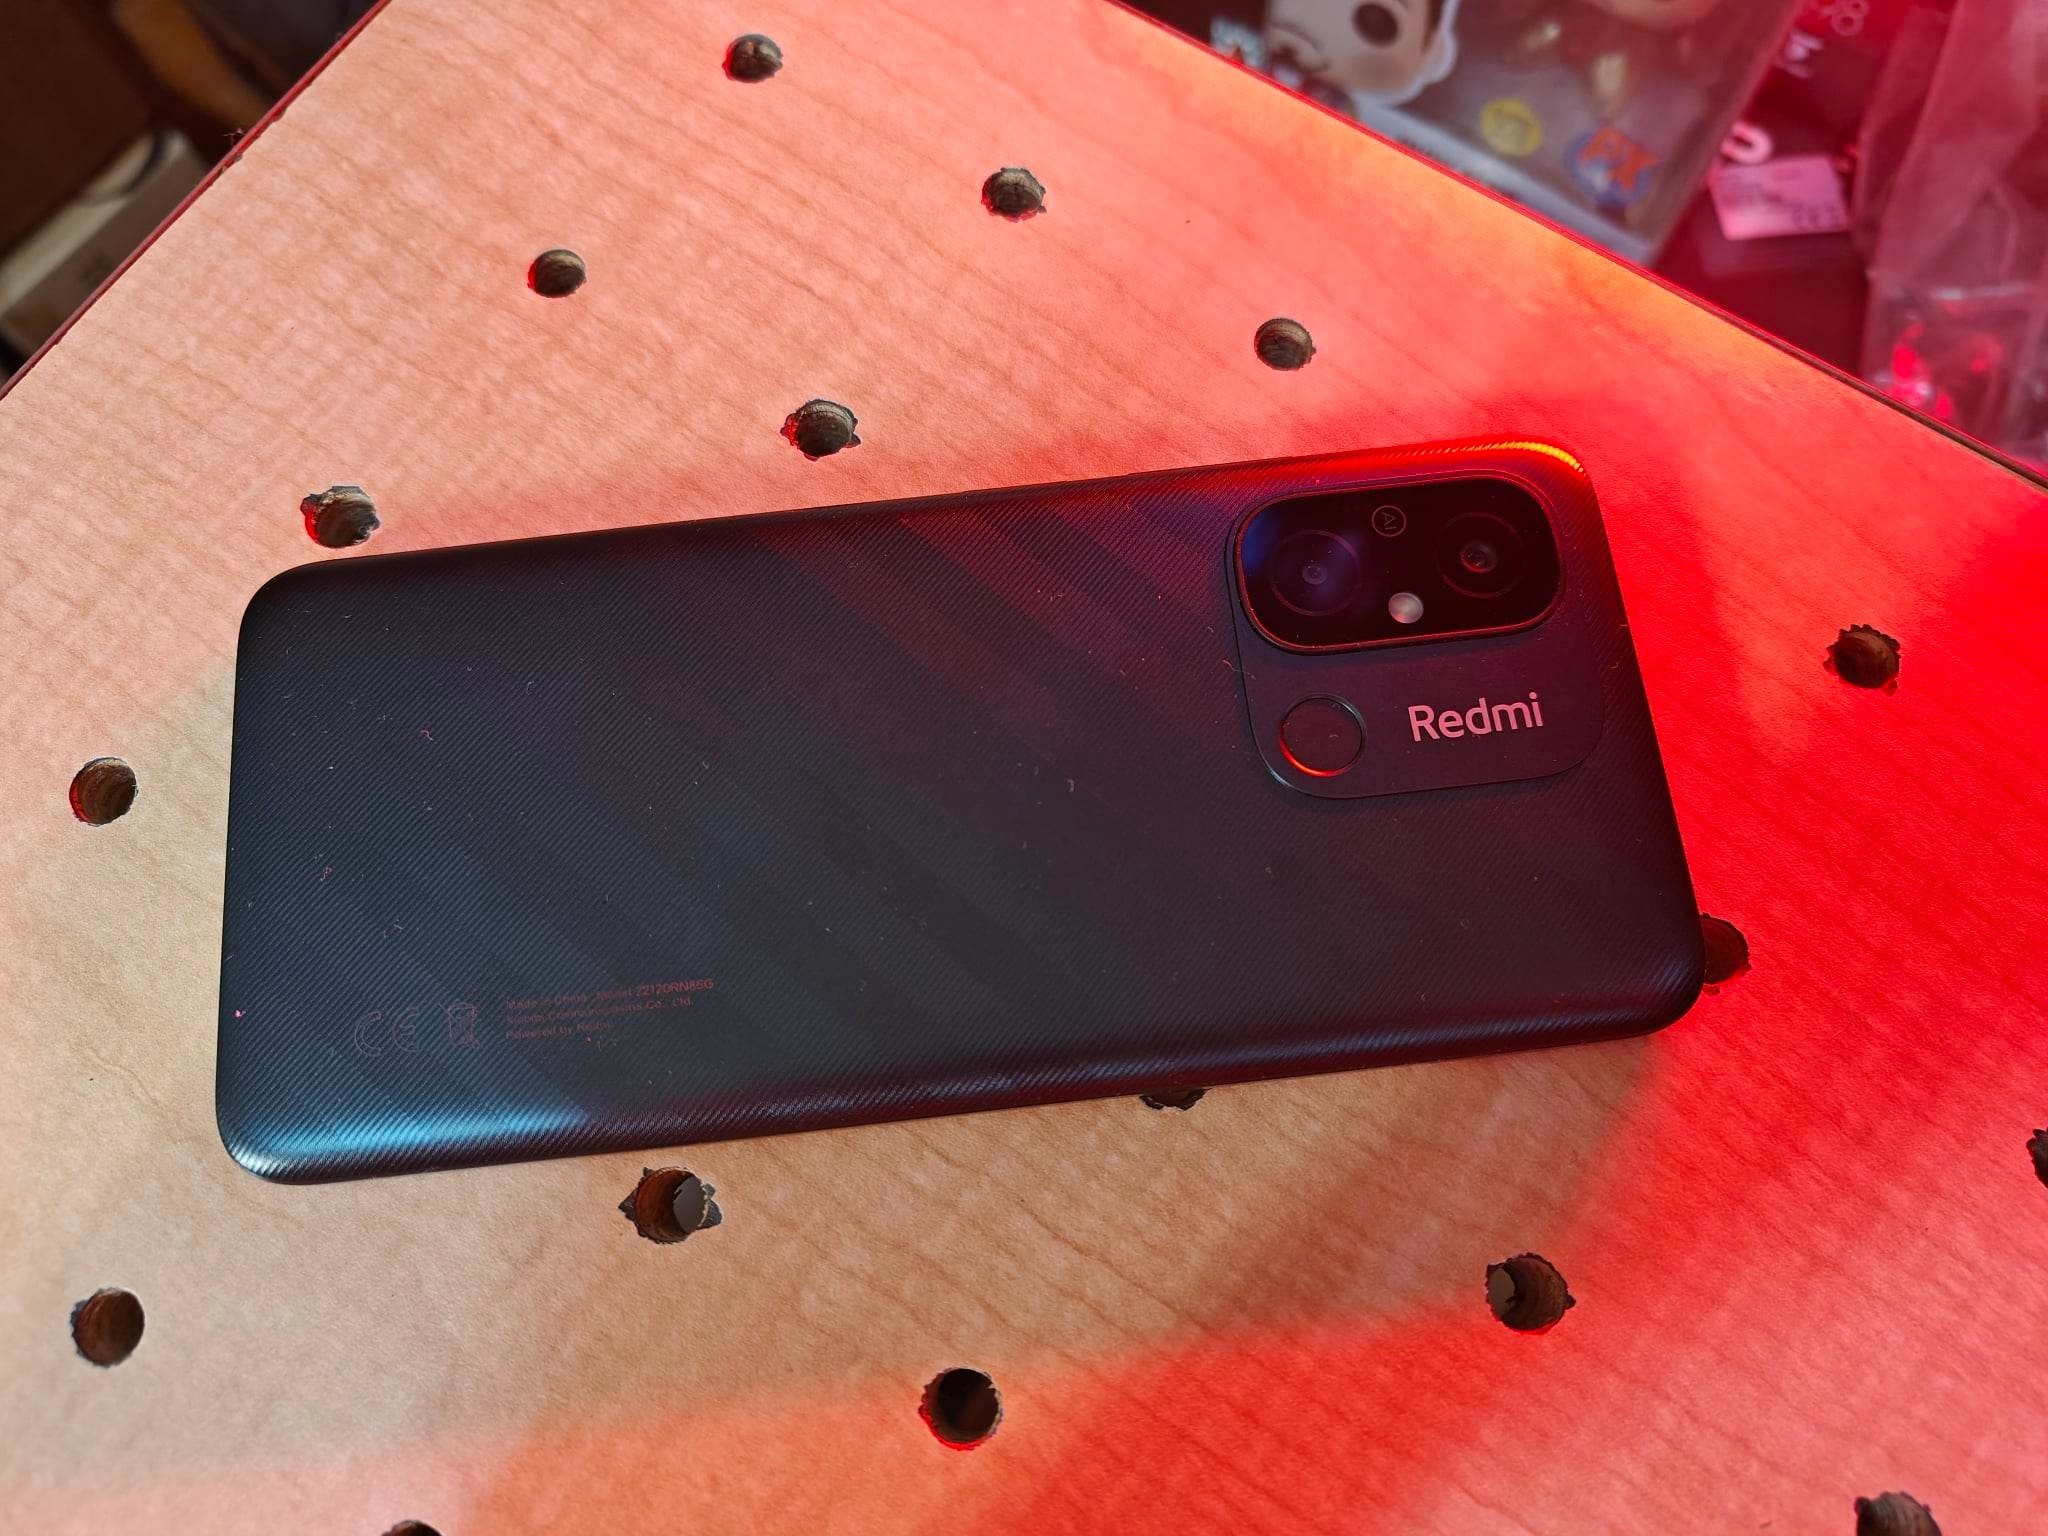 Xiaomi Redmi 12C review - Which?